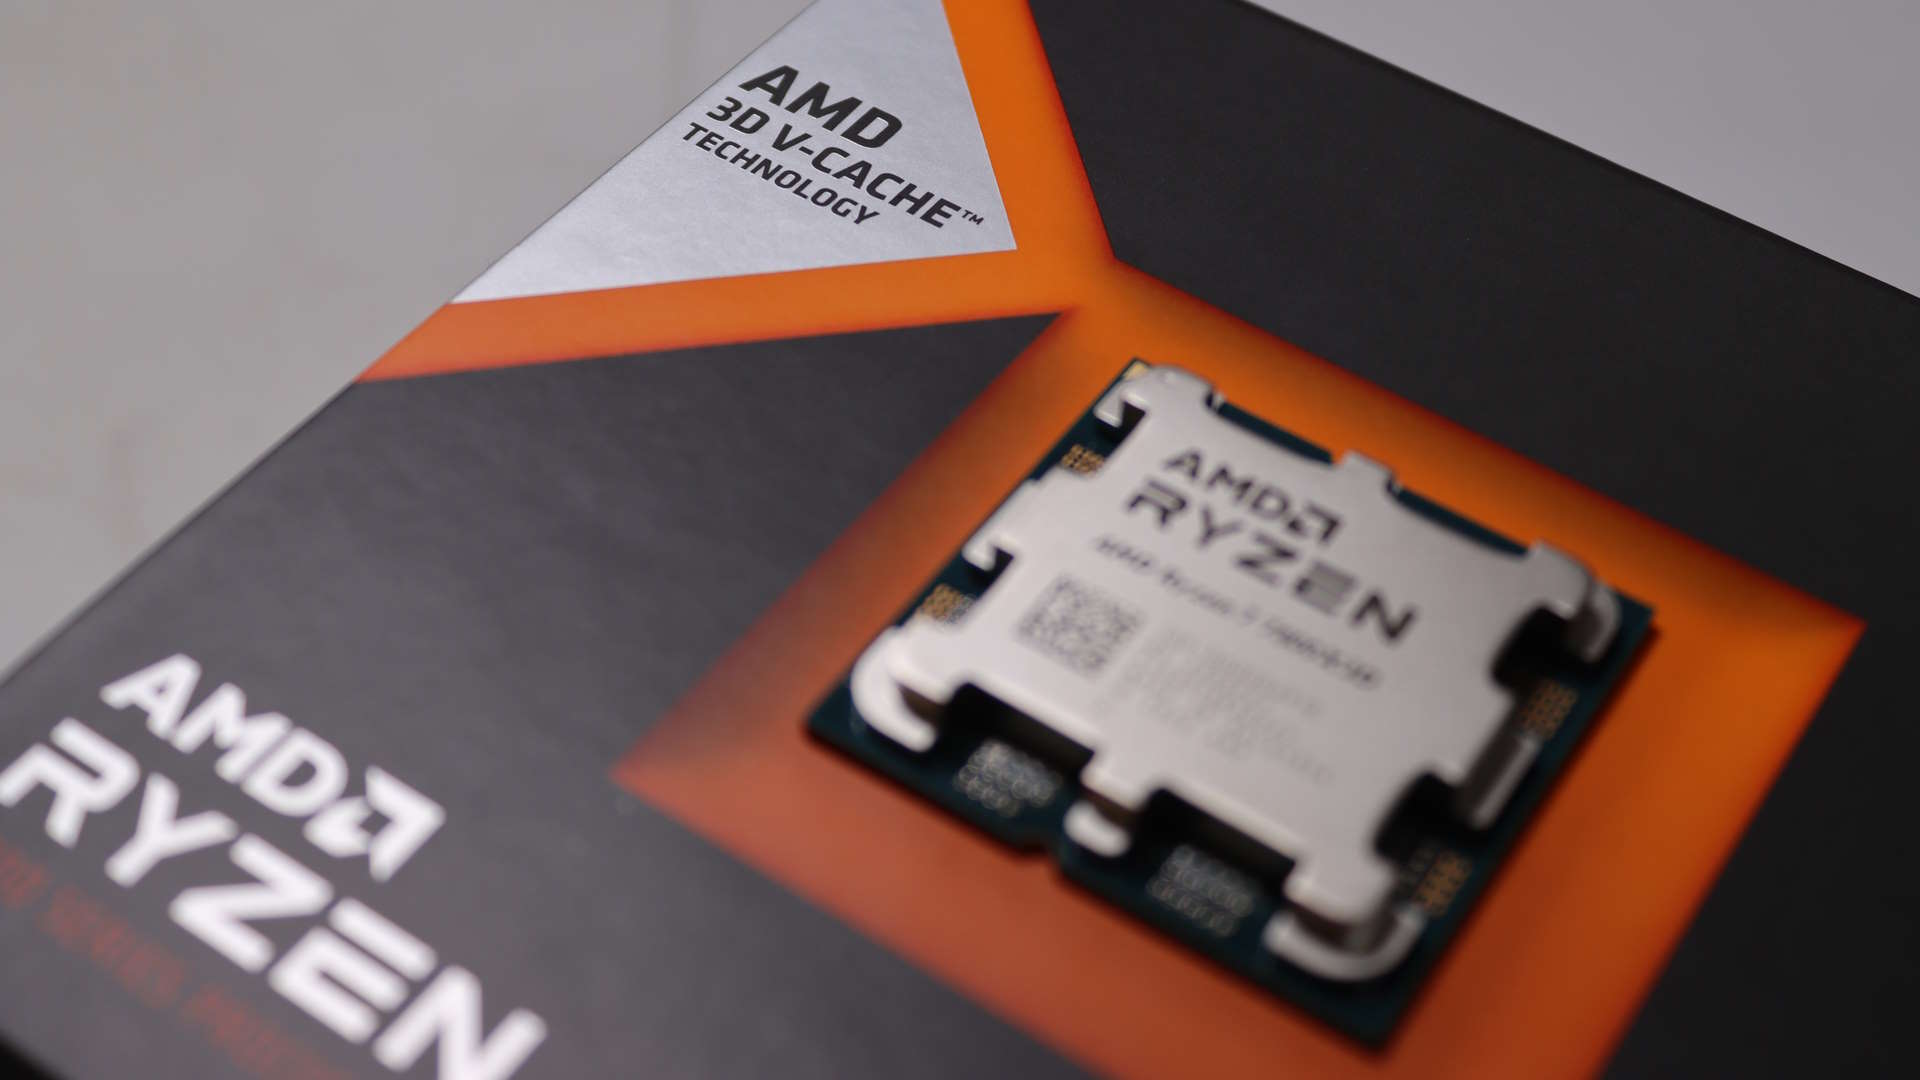 AMD Ryzen 7 7800X3D processor